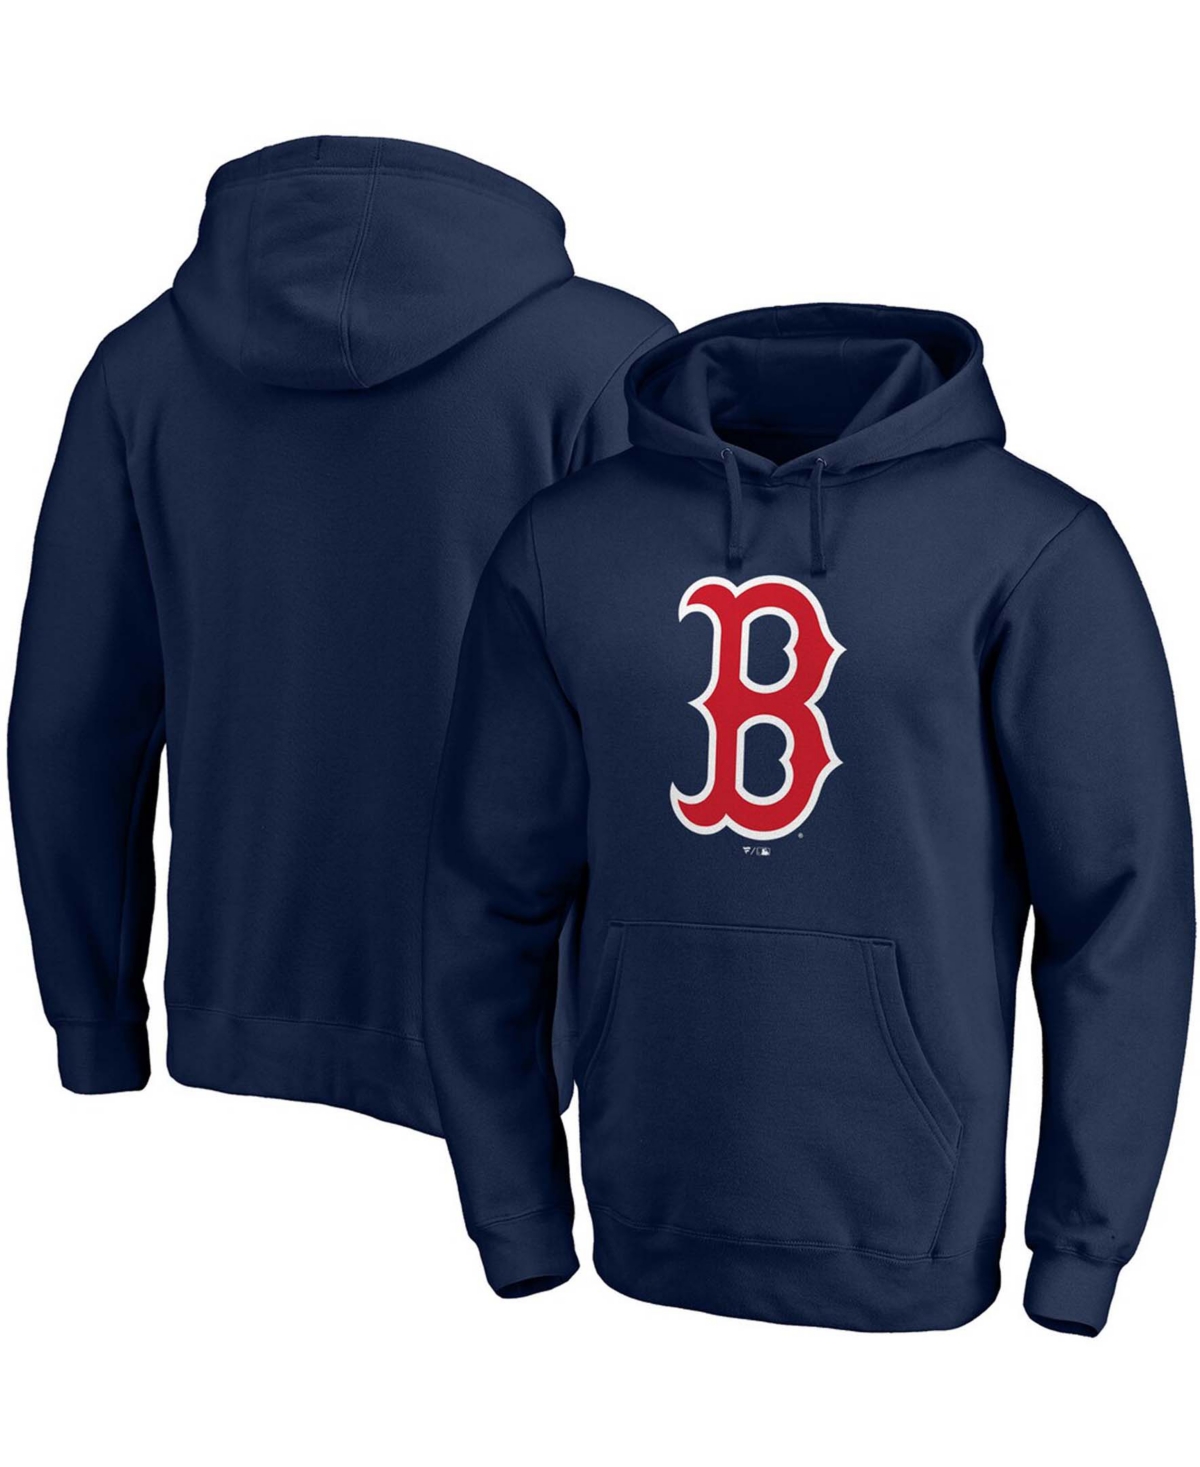 Fanatics Men's Navy Boston Red Sox Official Logo Pullover Hoodie